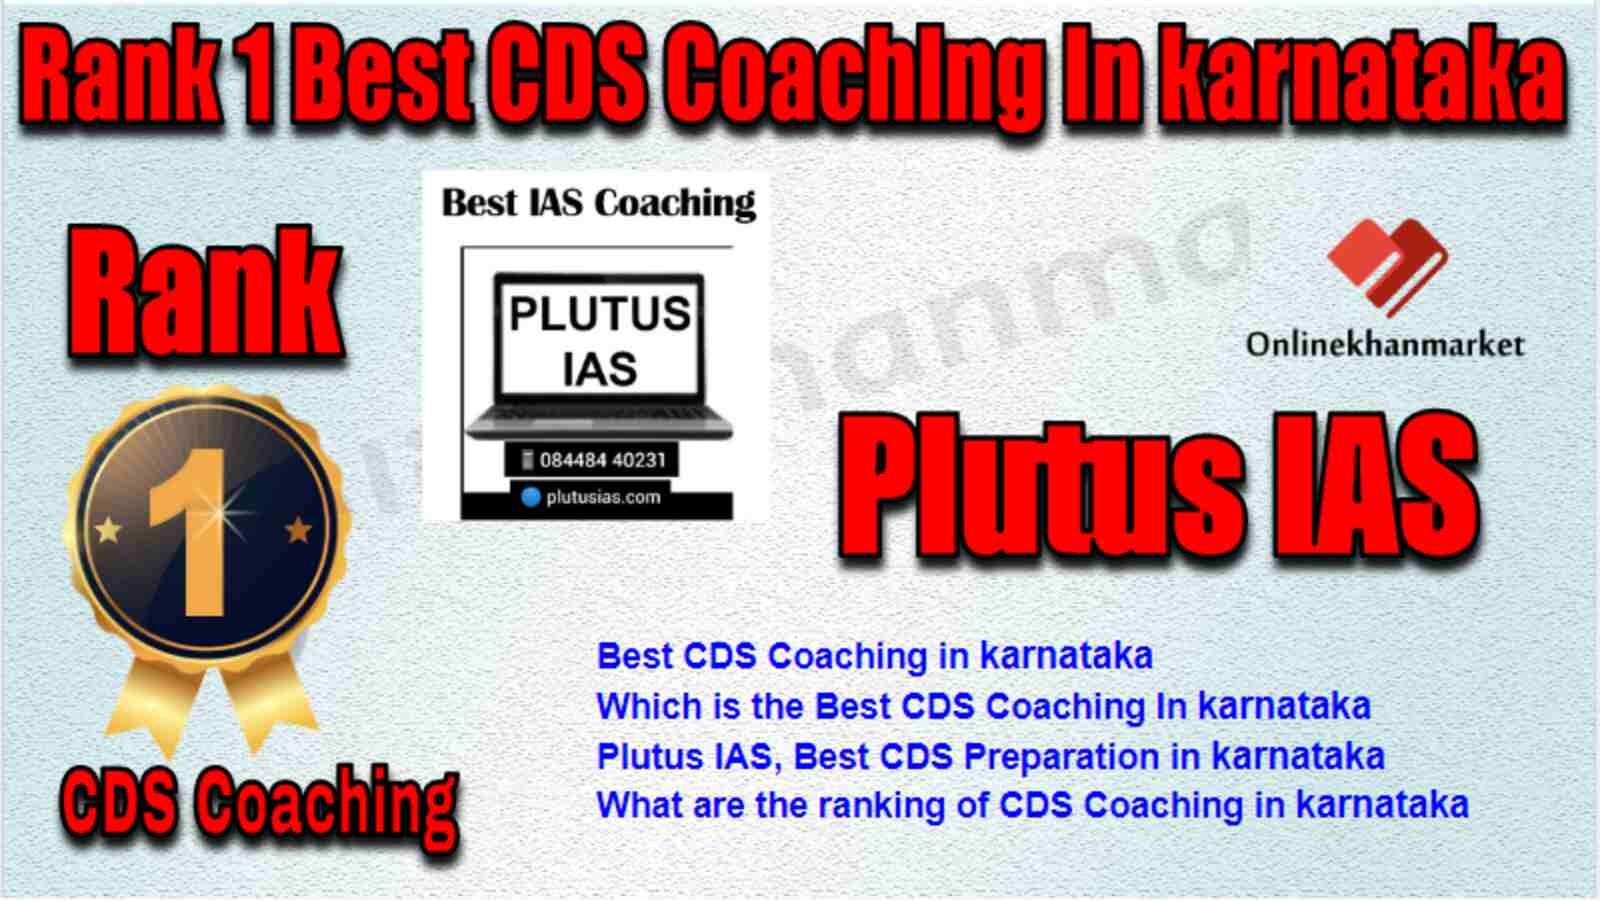 Rank 1 Best CDS Coaching in Karnataka